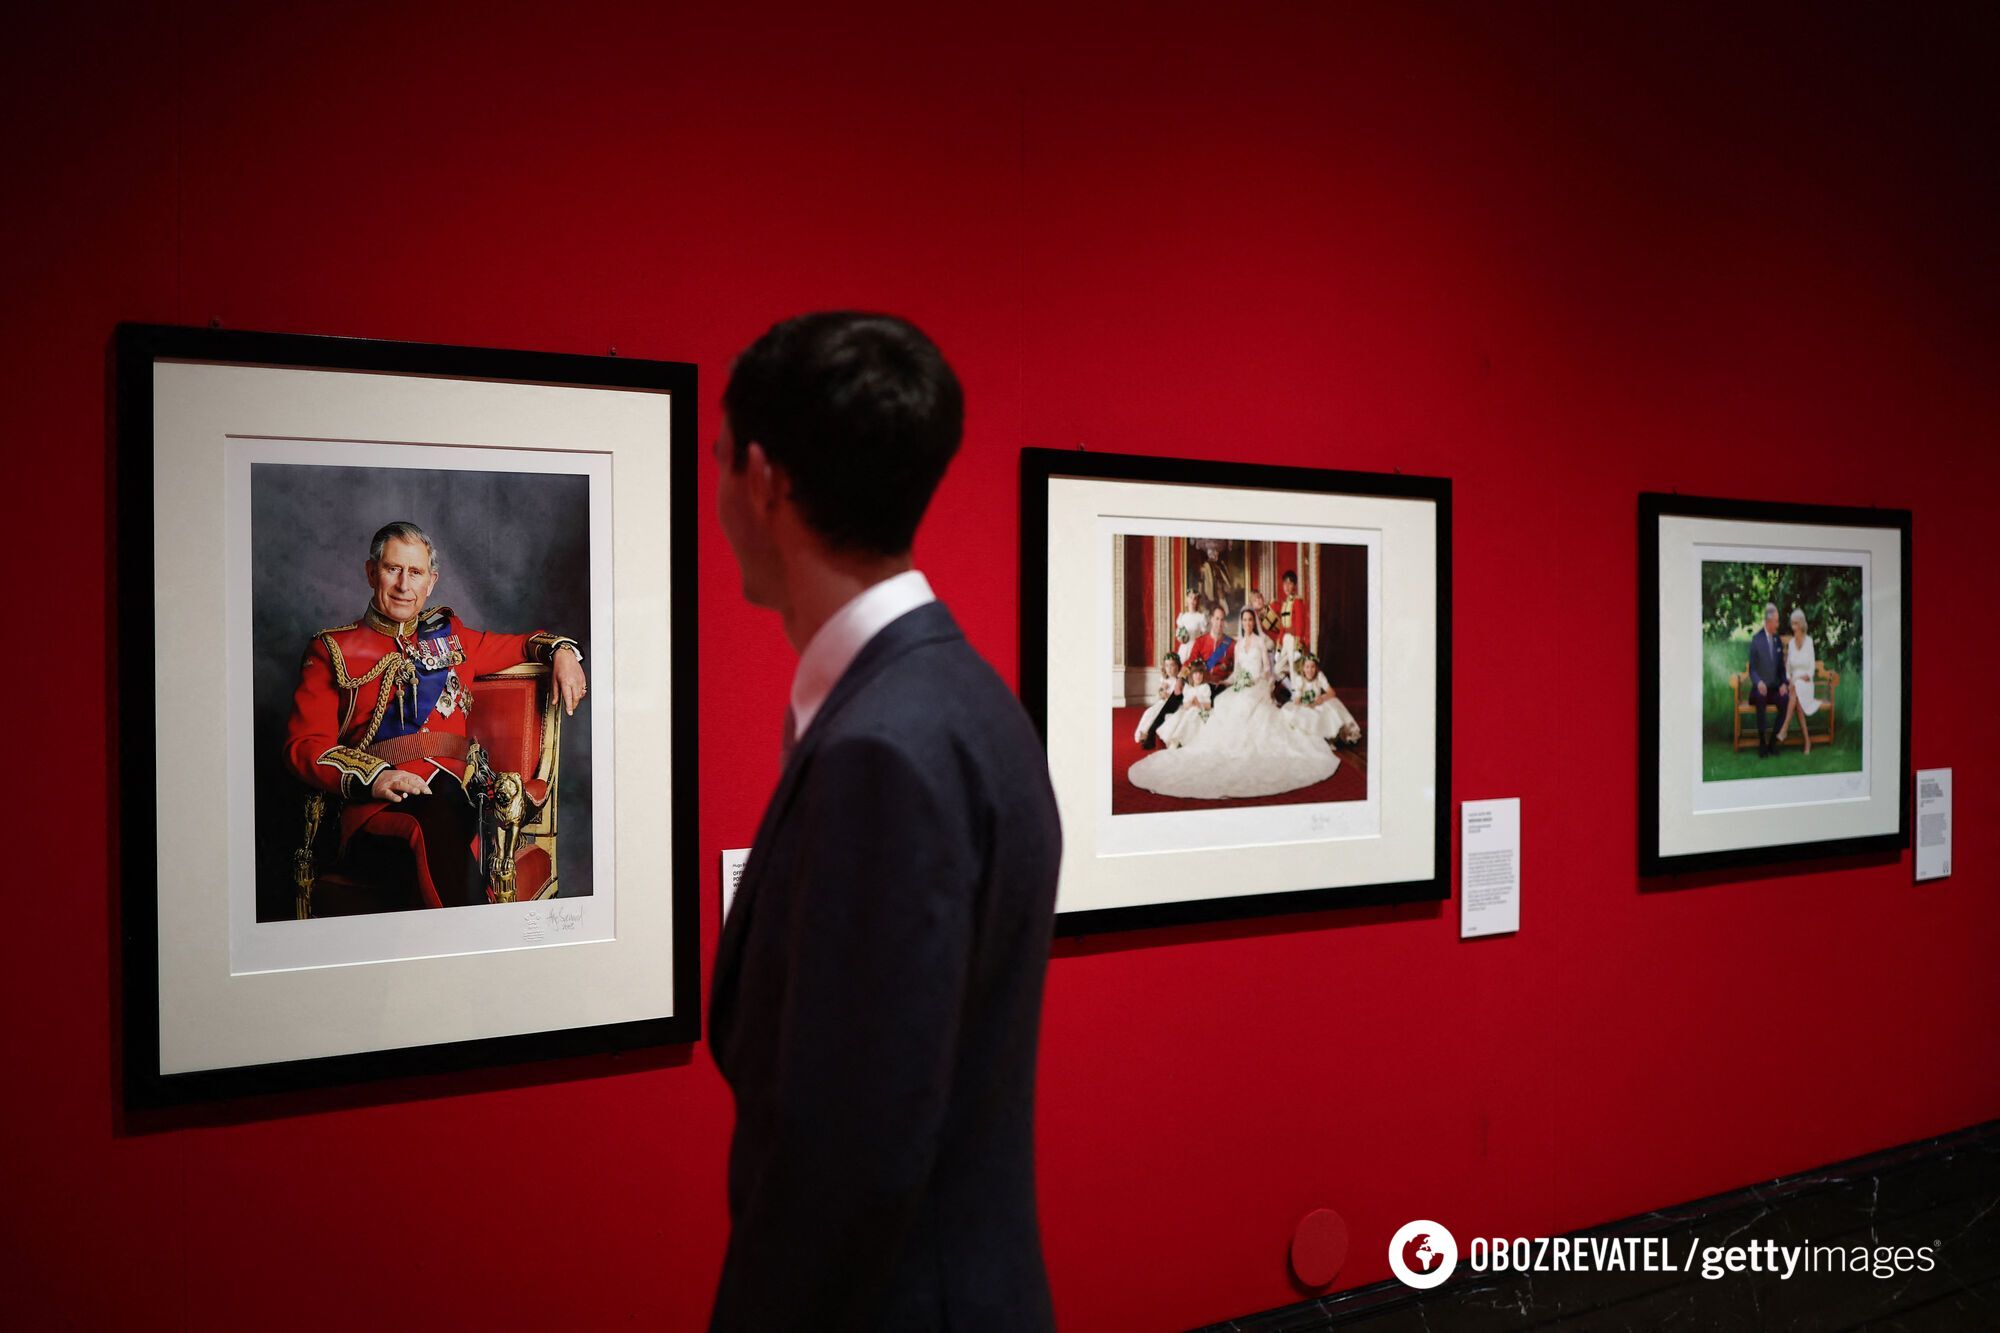 Buckingham Palace explains why portraits of royal family members are photoshopped